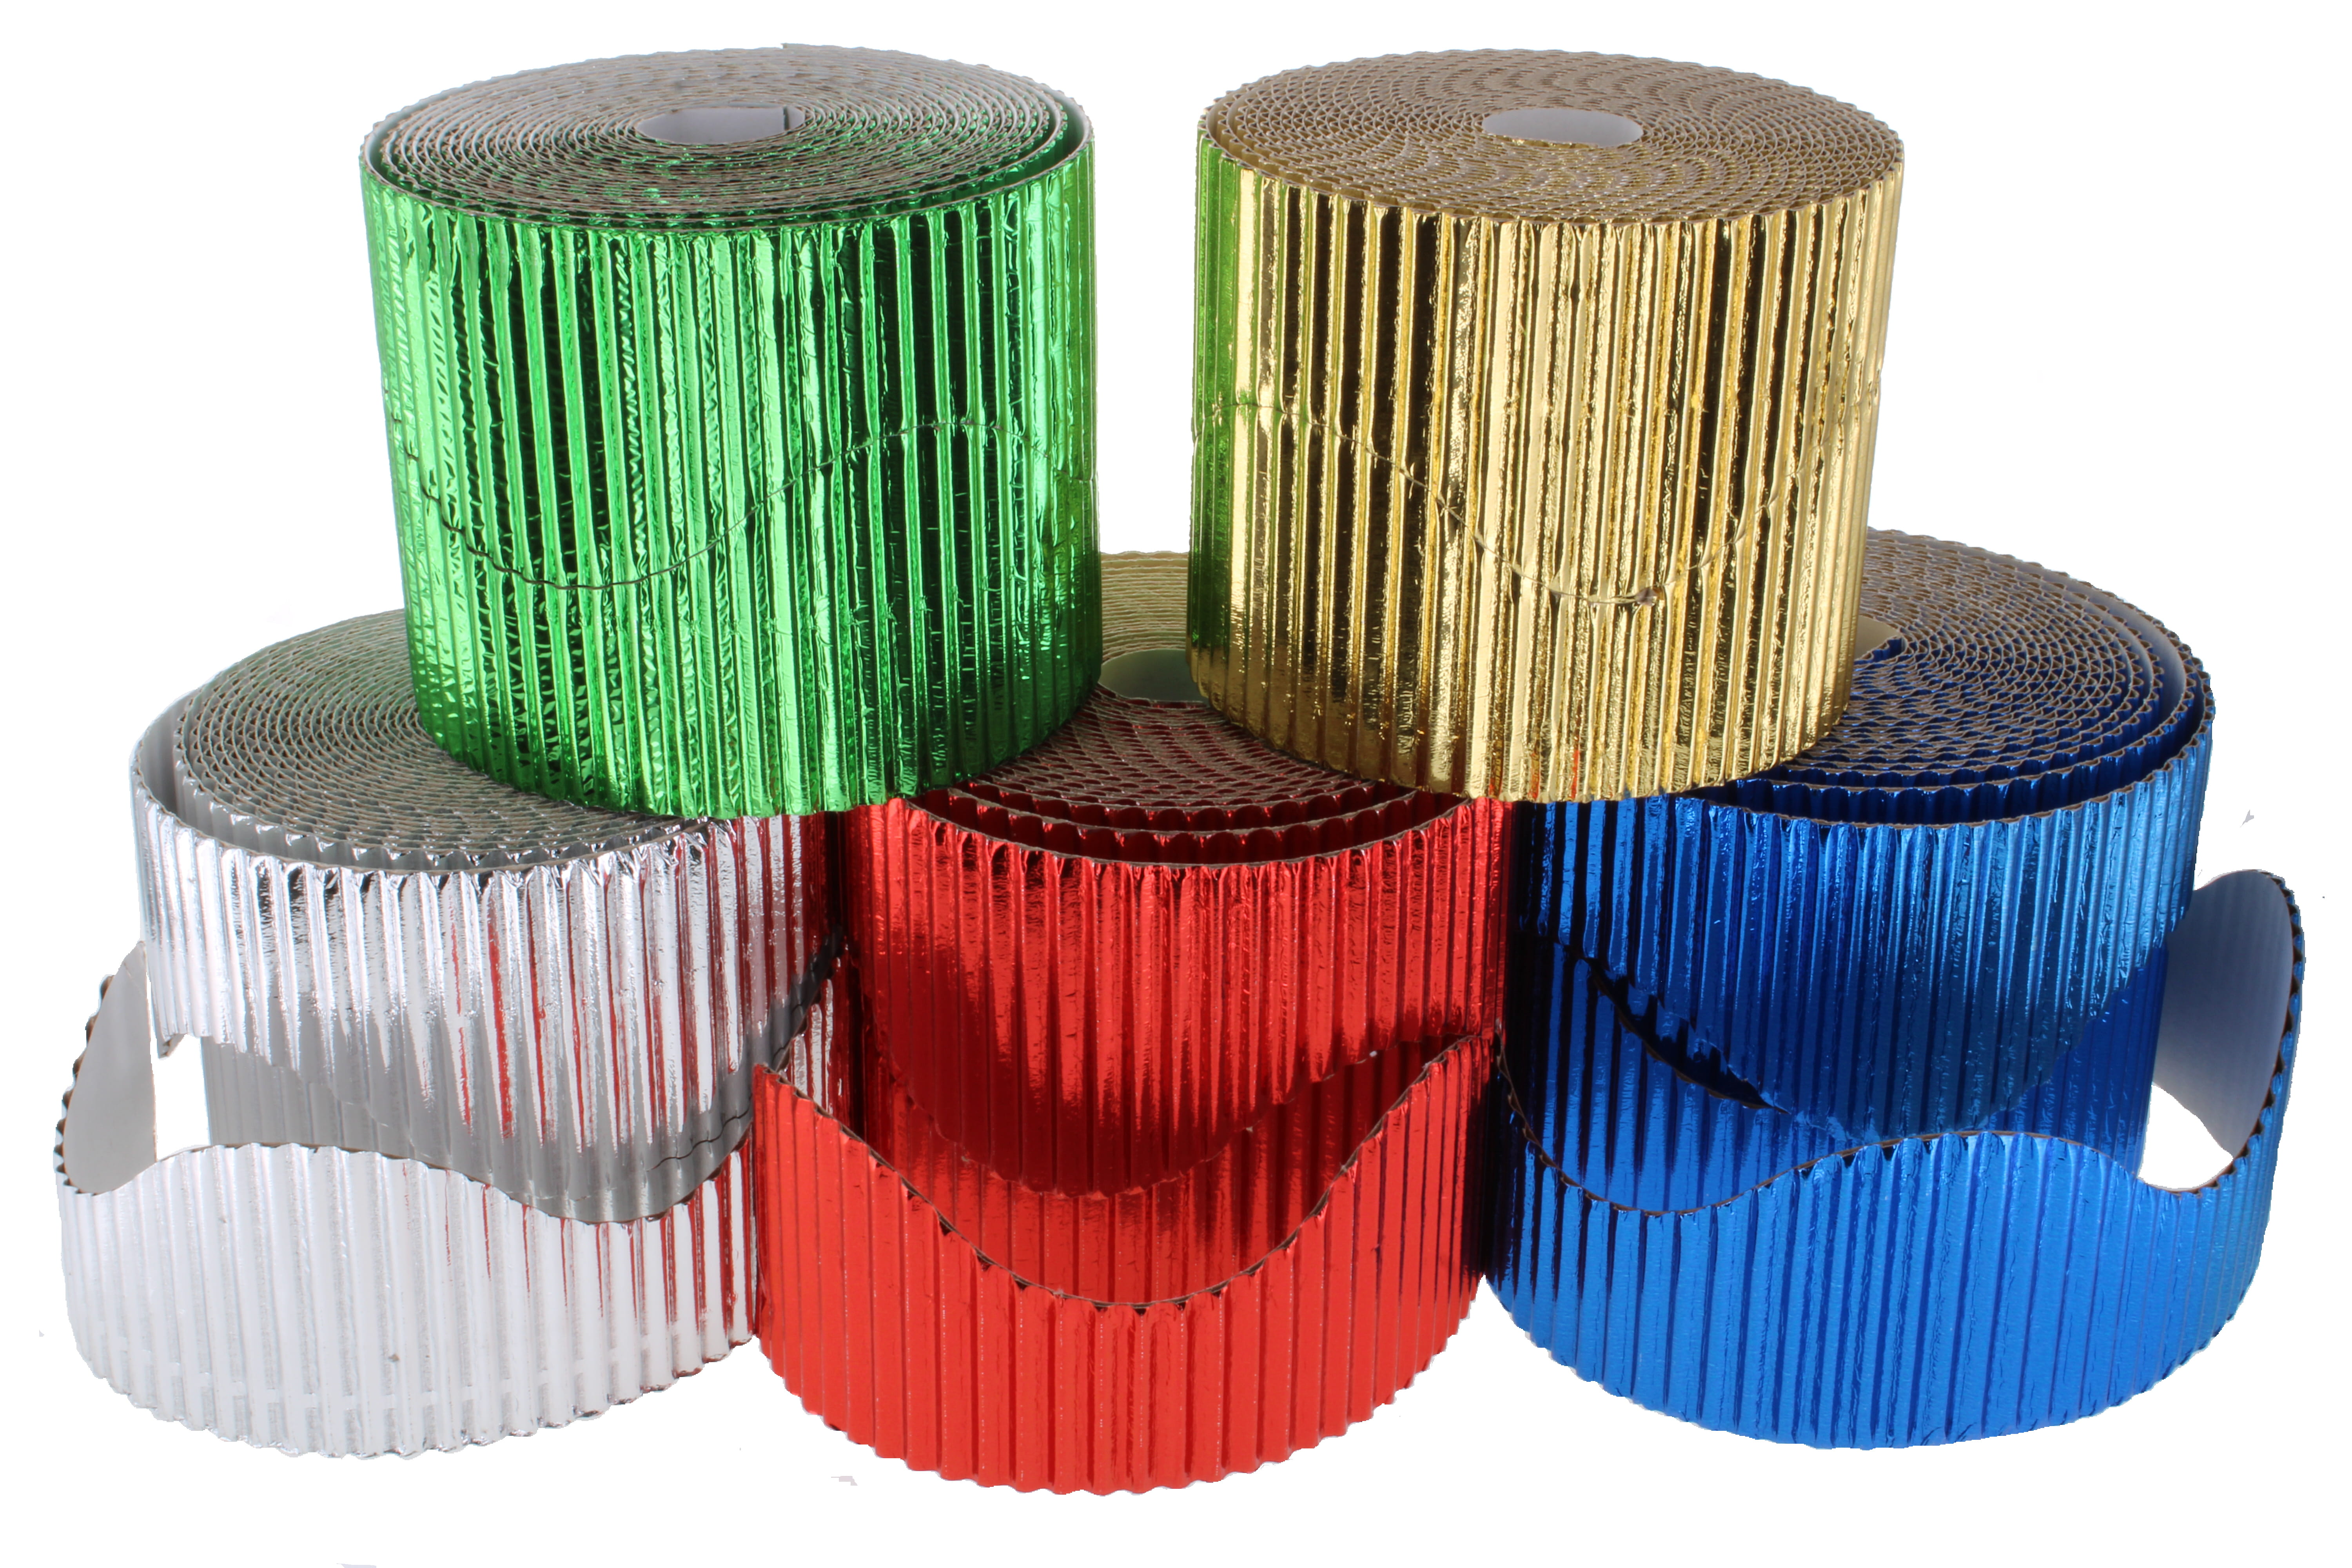 Border Rolls Corrugated Scalloped Metallic 5m - pack of 10 - STF73